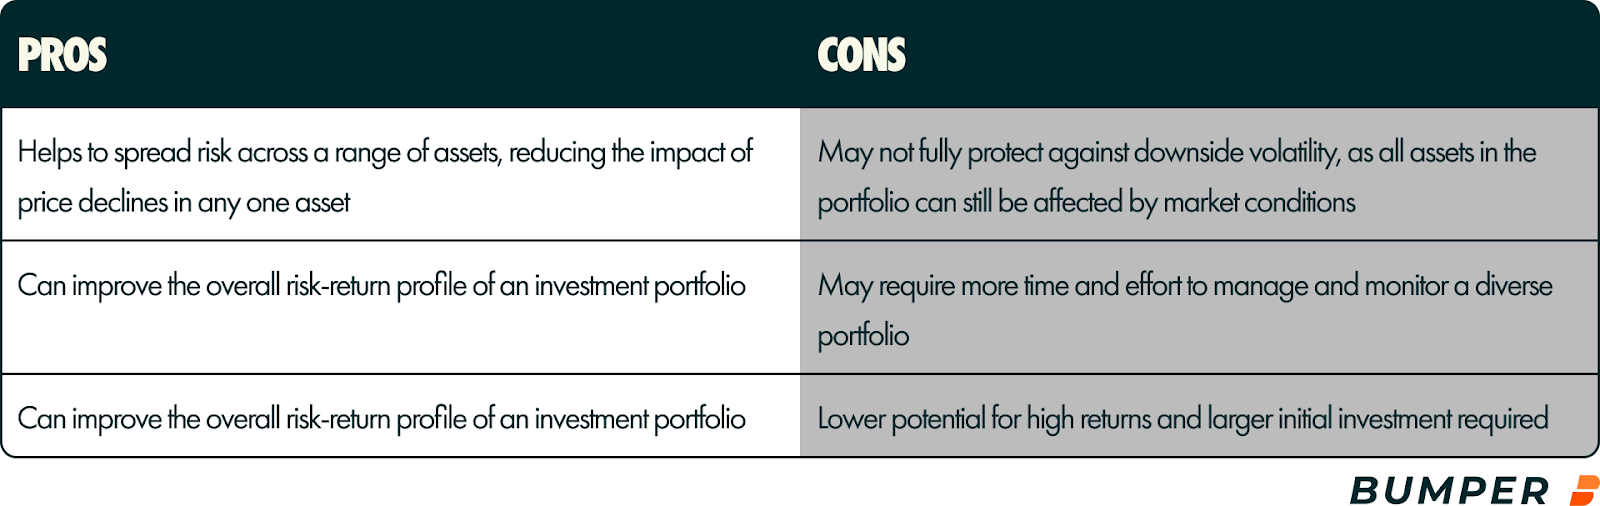 Pros and cons of crypto portfolio diversification